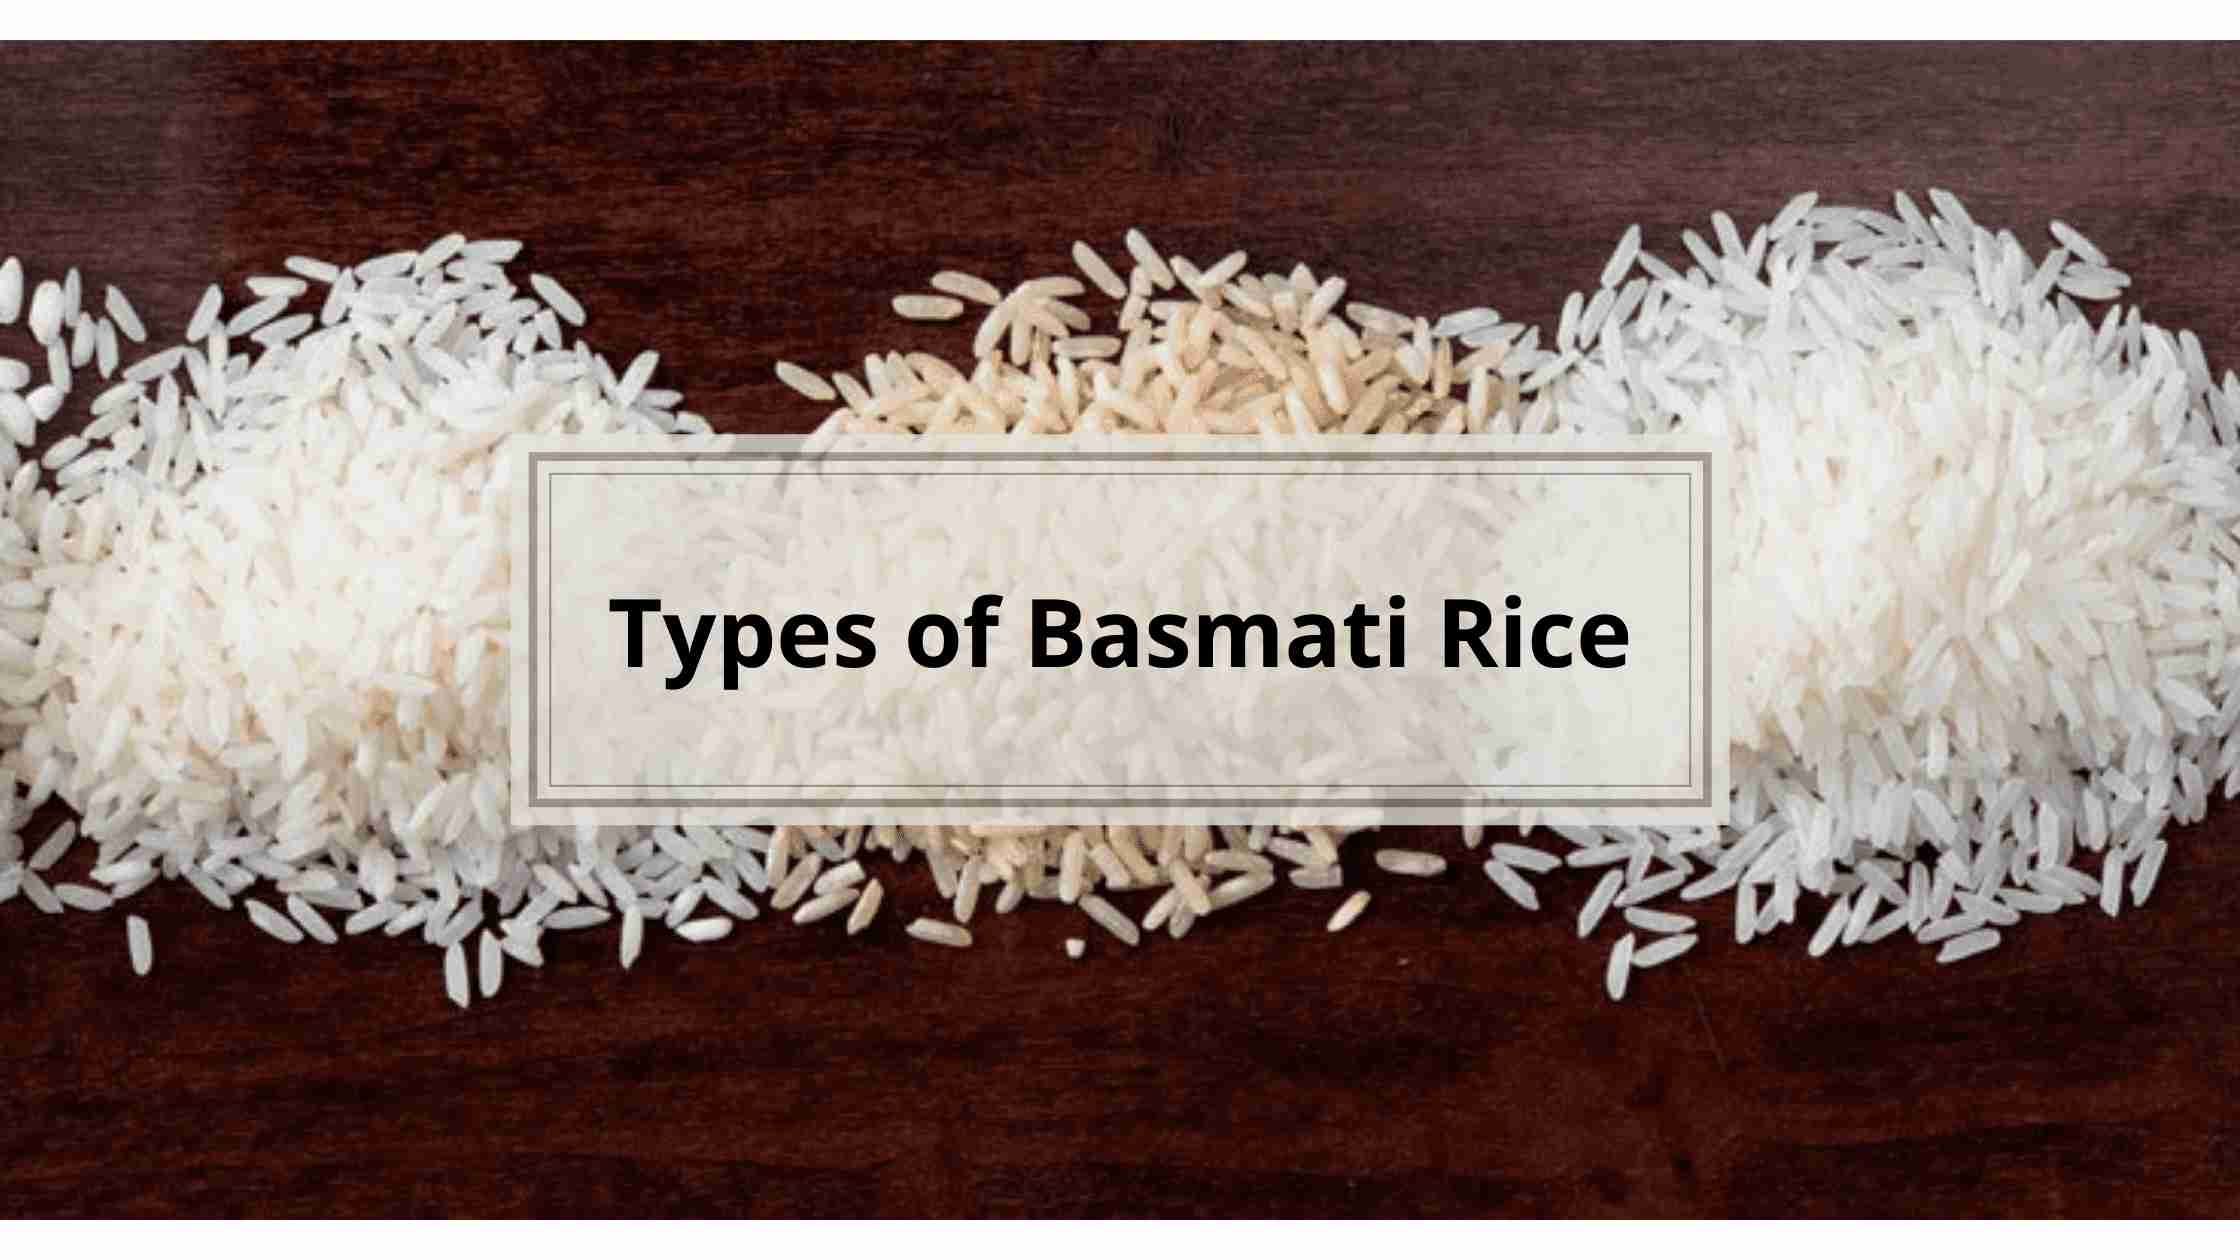 Types of Basmati Rice